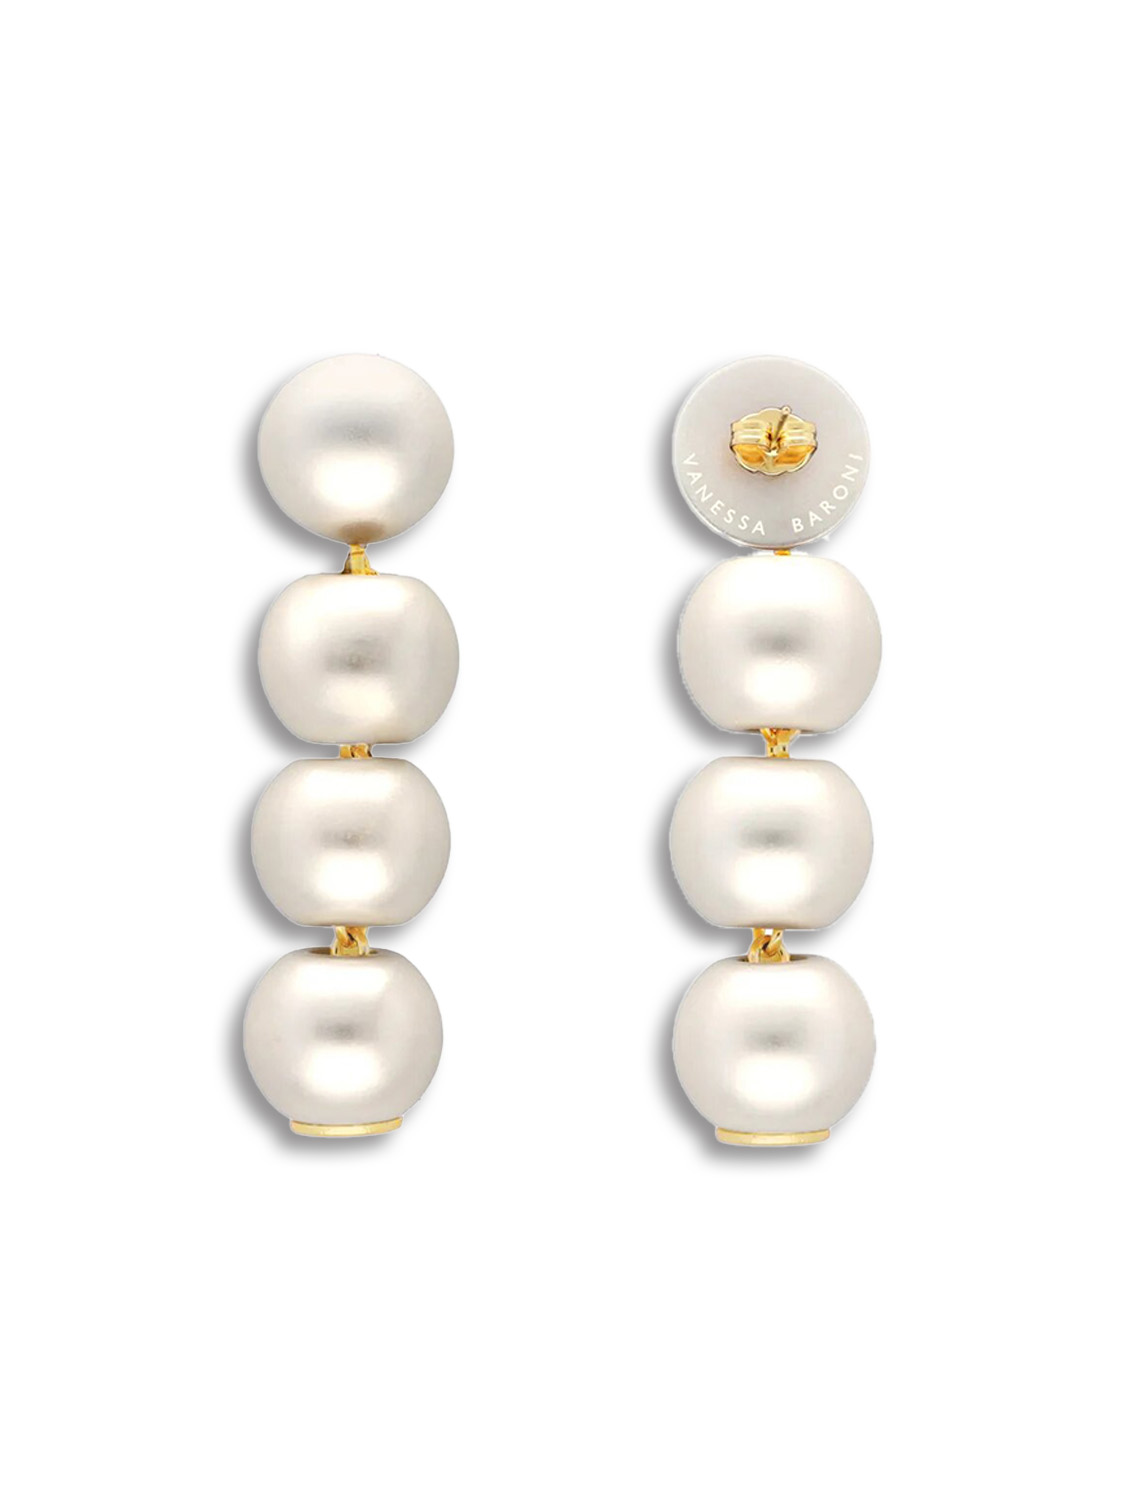 Small Beads Earring - Earrings in bead design